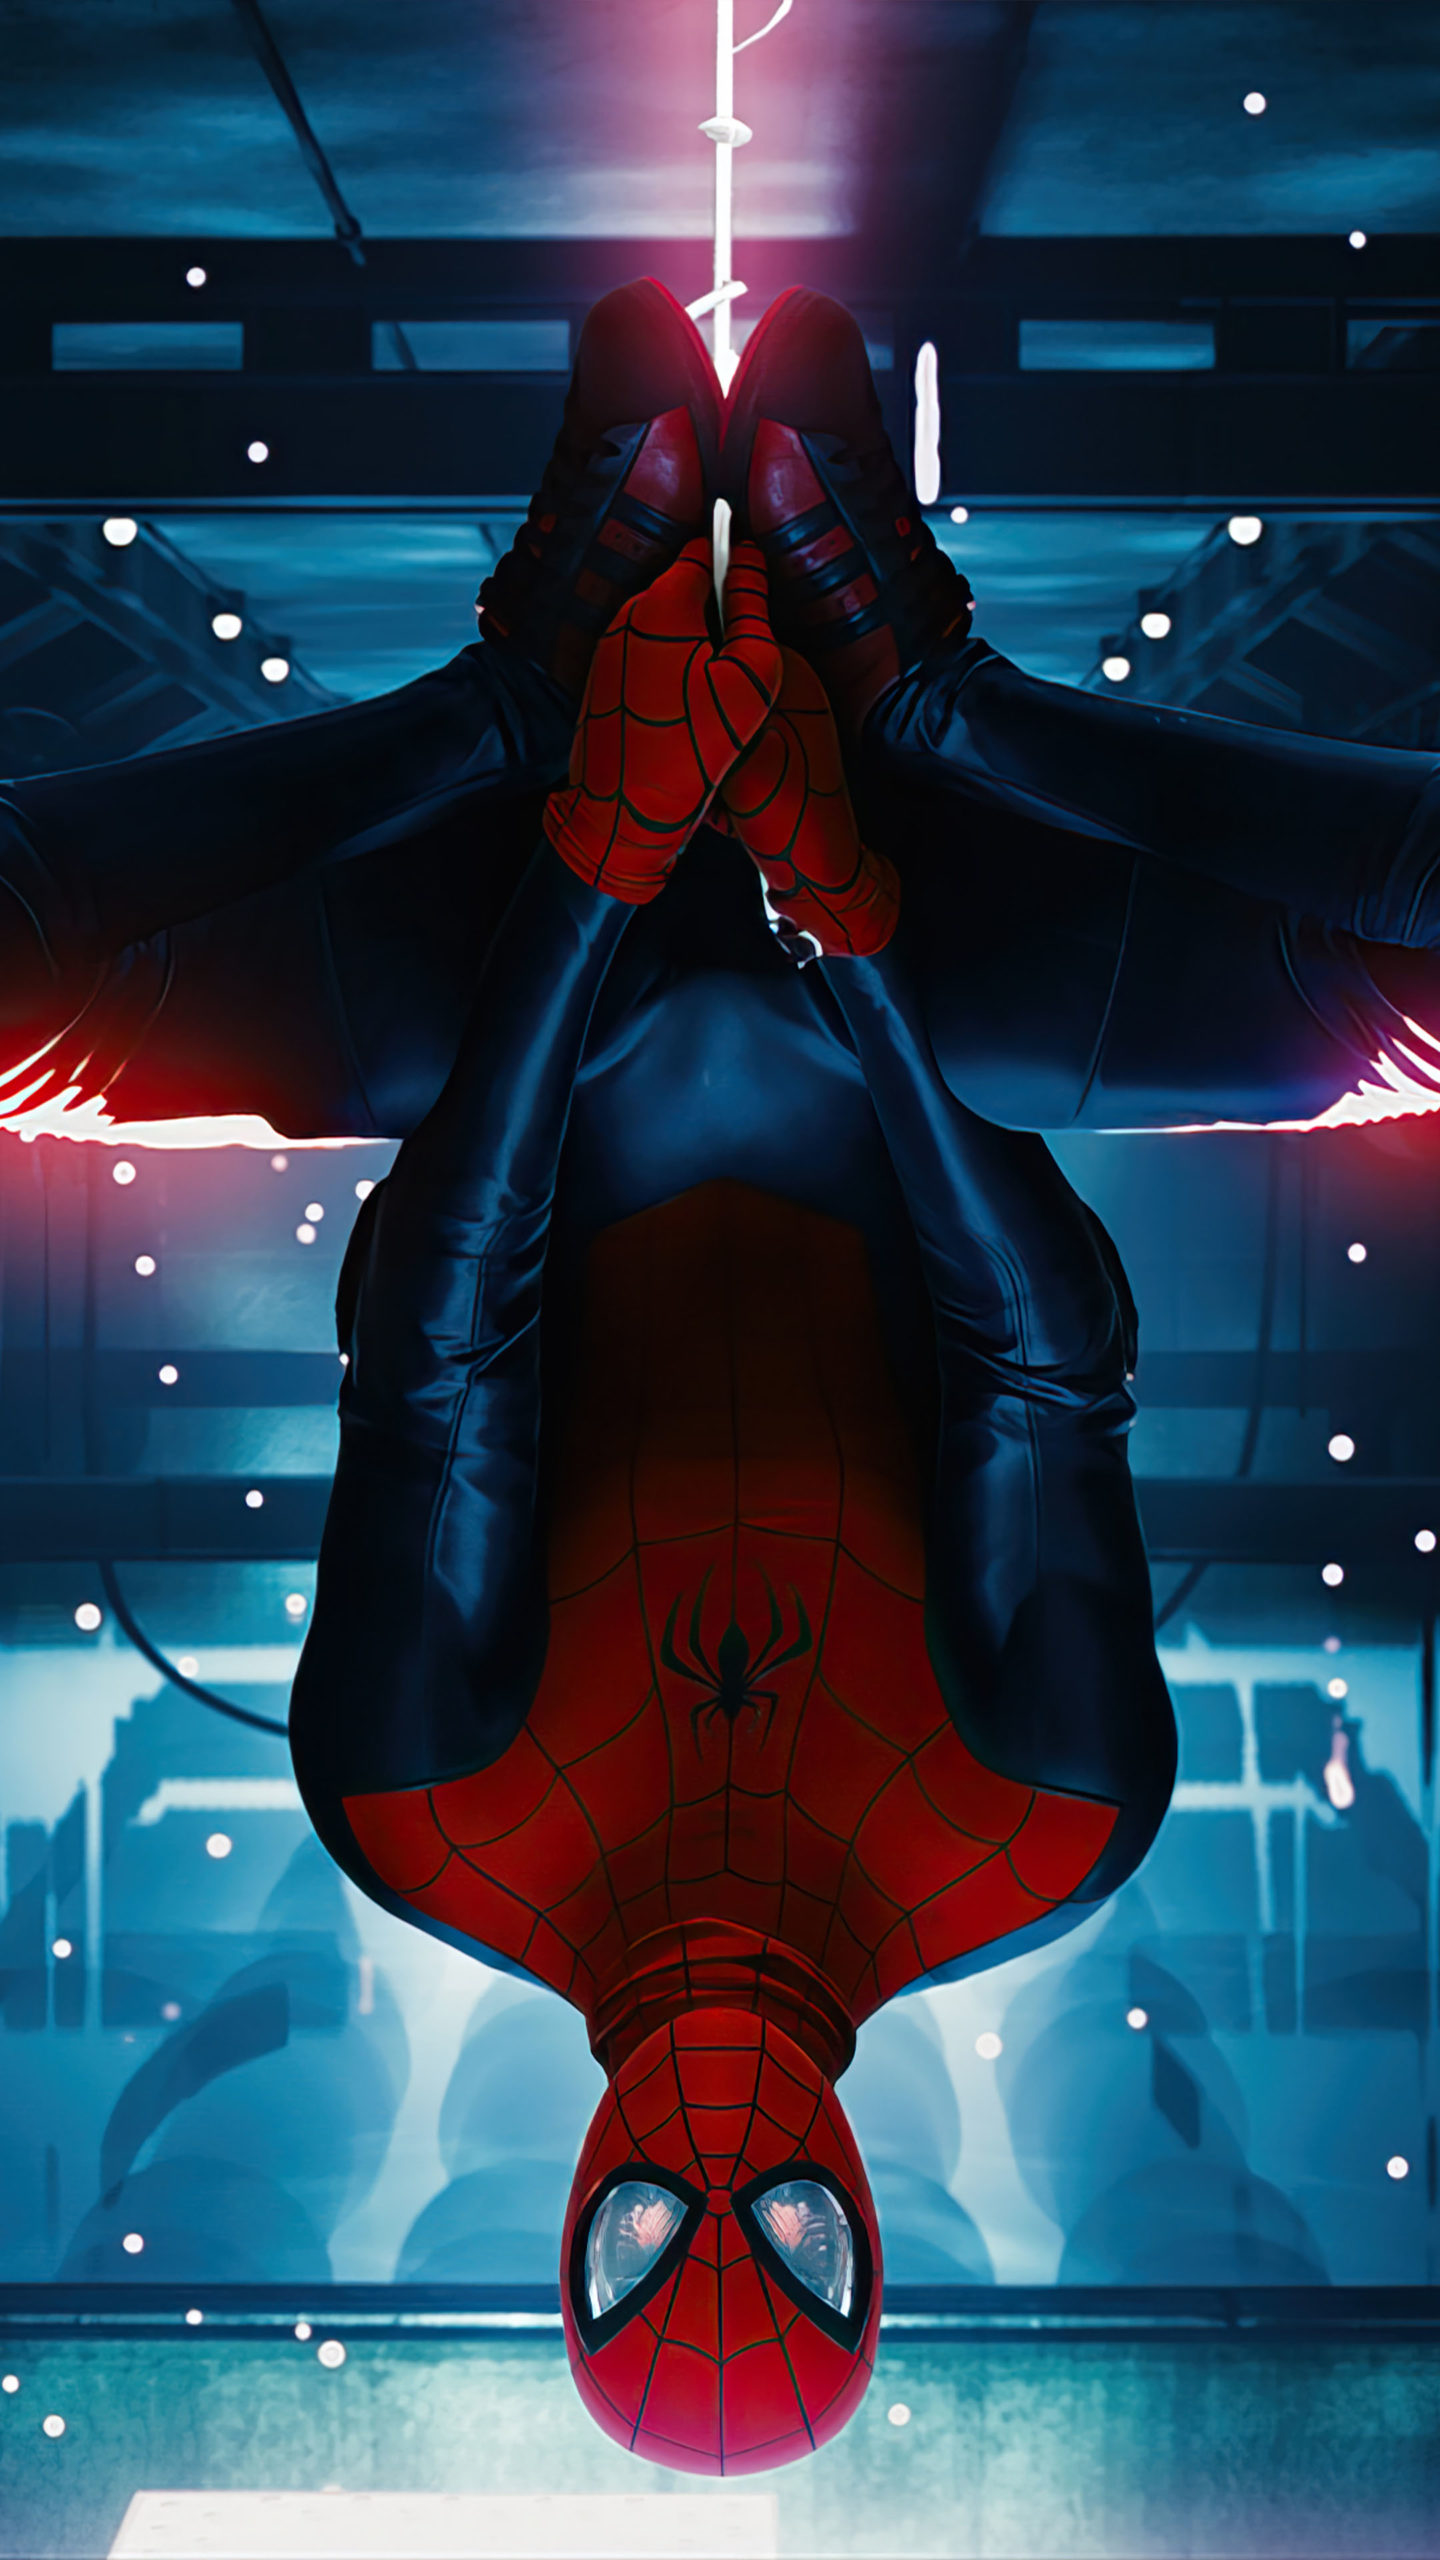 Spider Man Miles Morales Hanging Upside Down 4k Ultra HD Mobile